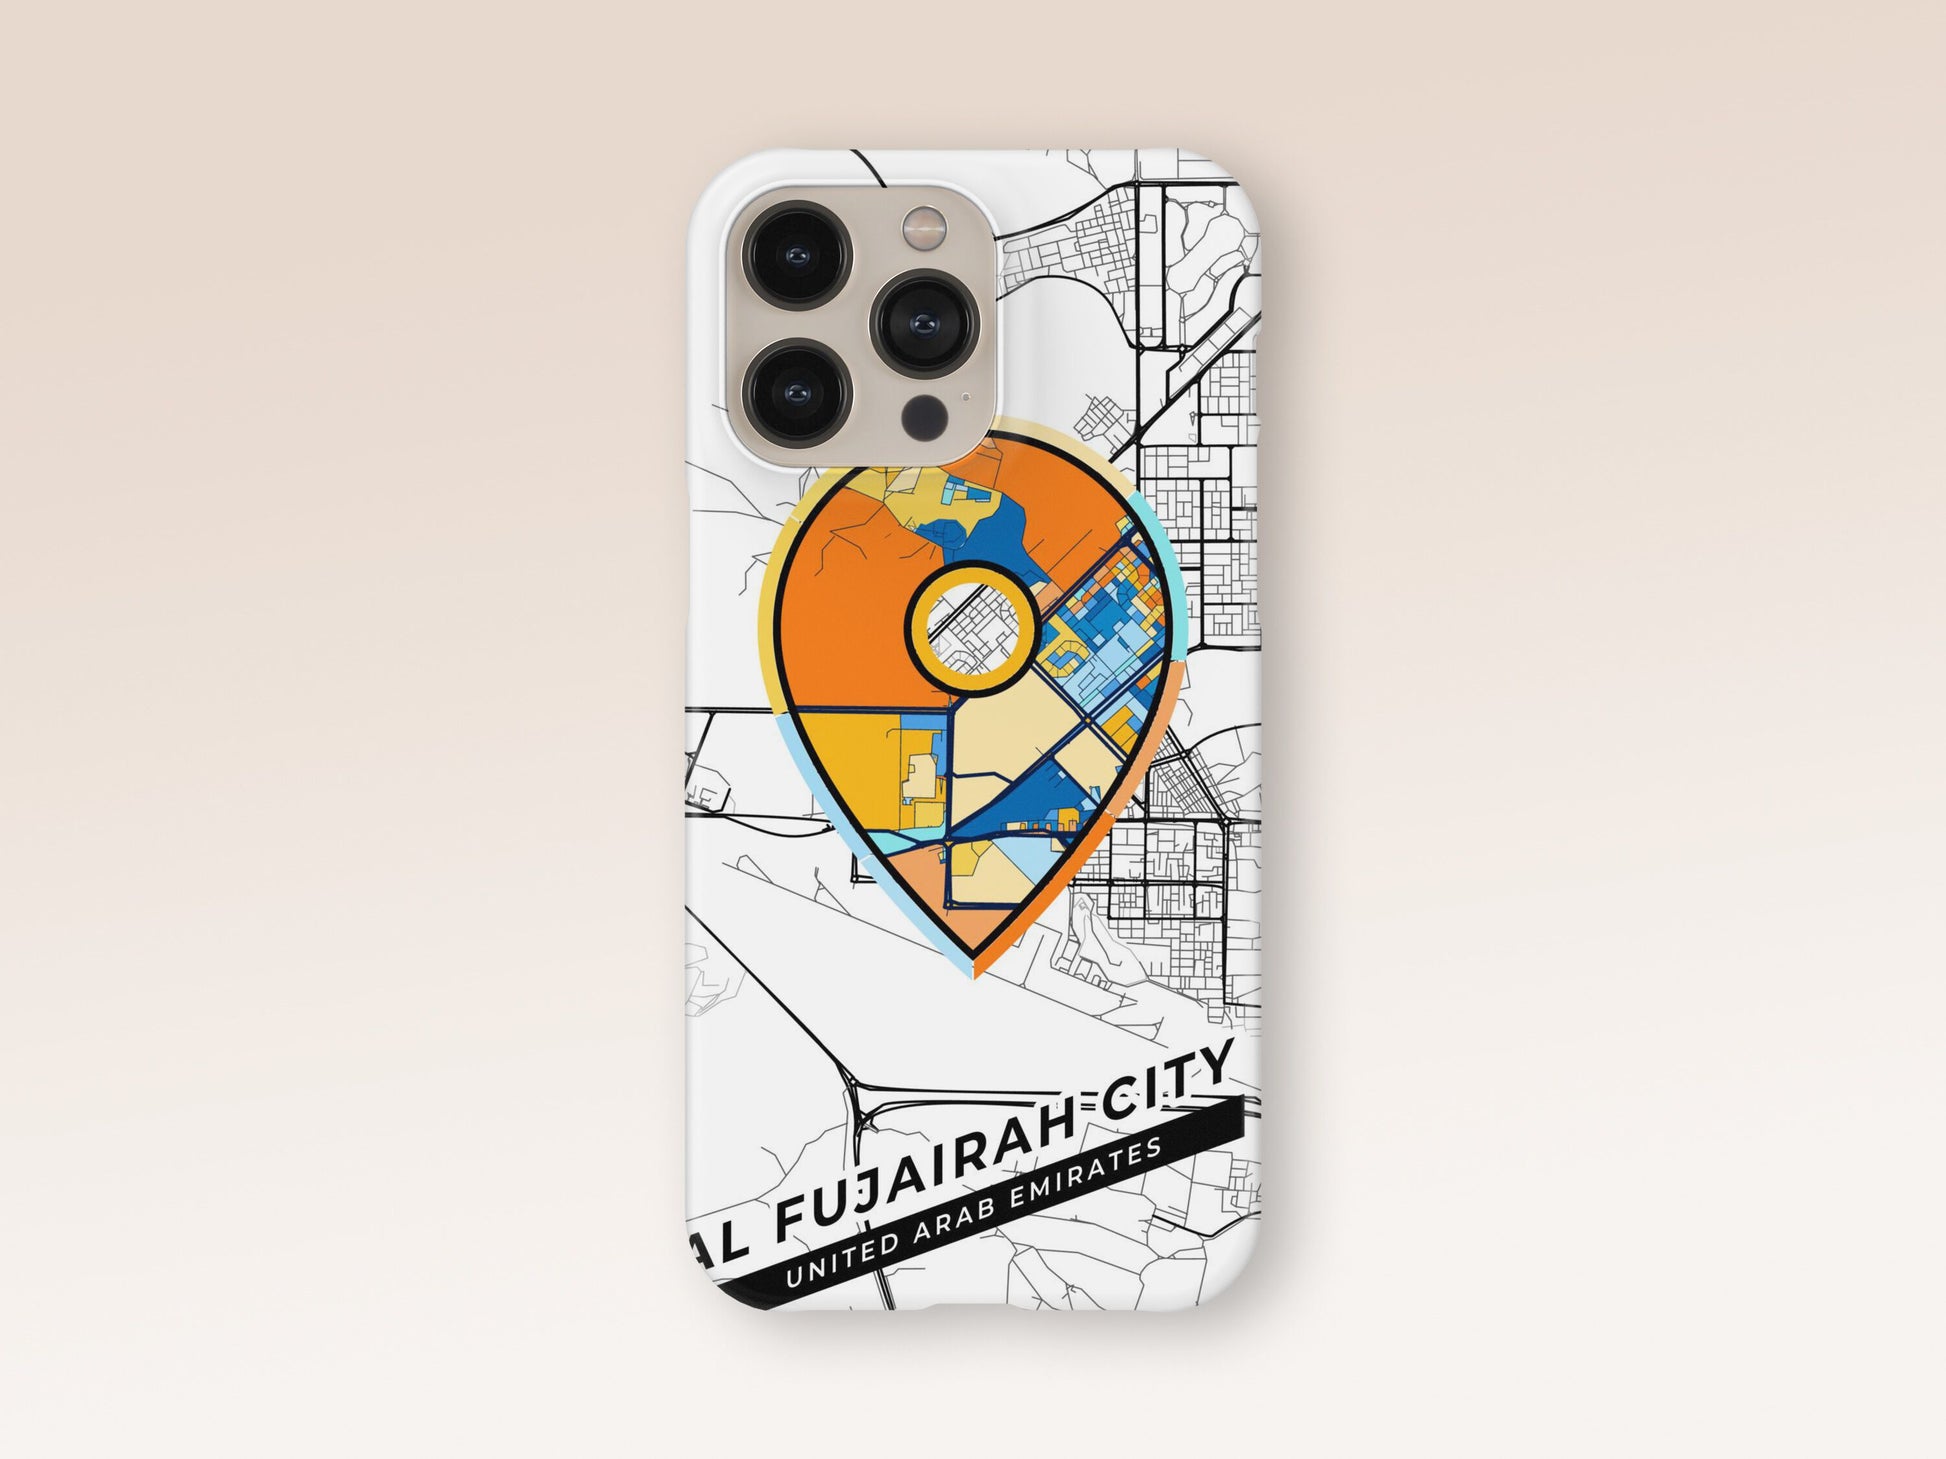 Al Fujairah City United Arab Emirates slim phone case with colorful icon. Birthday, wedding or housewarming gift. Couple match cases. 1